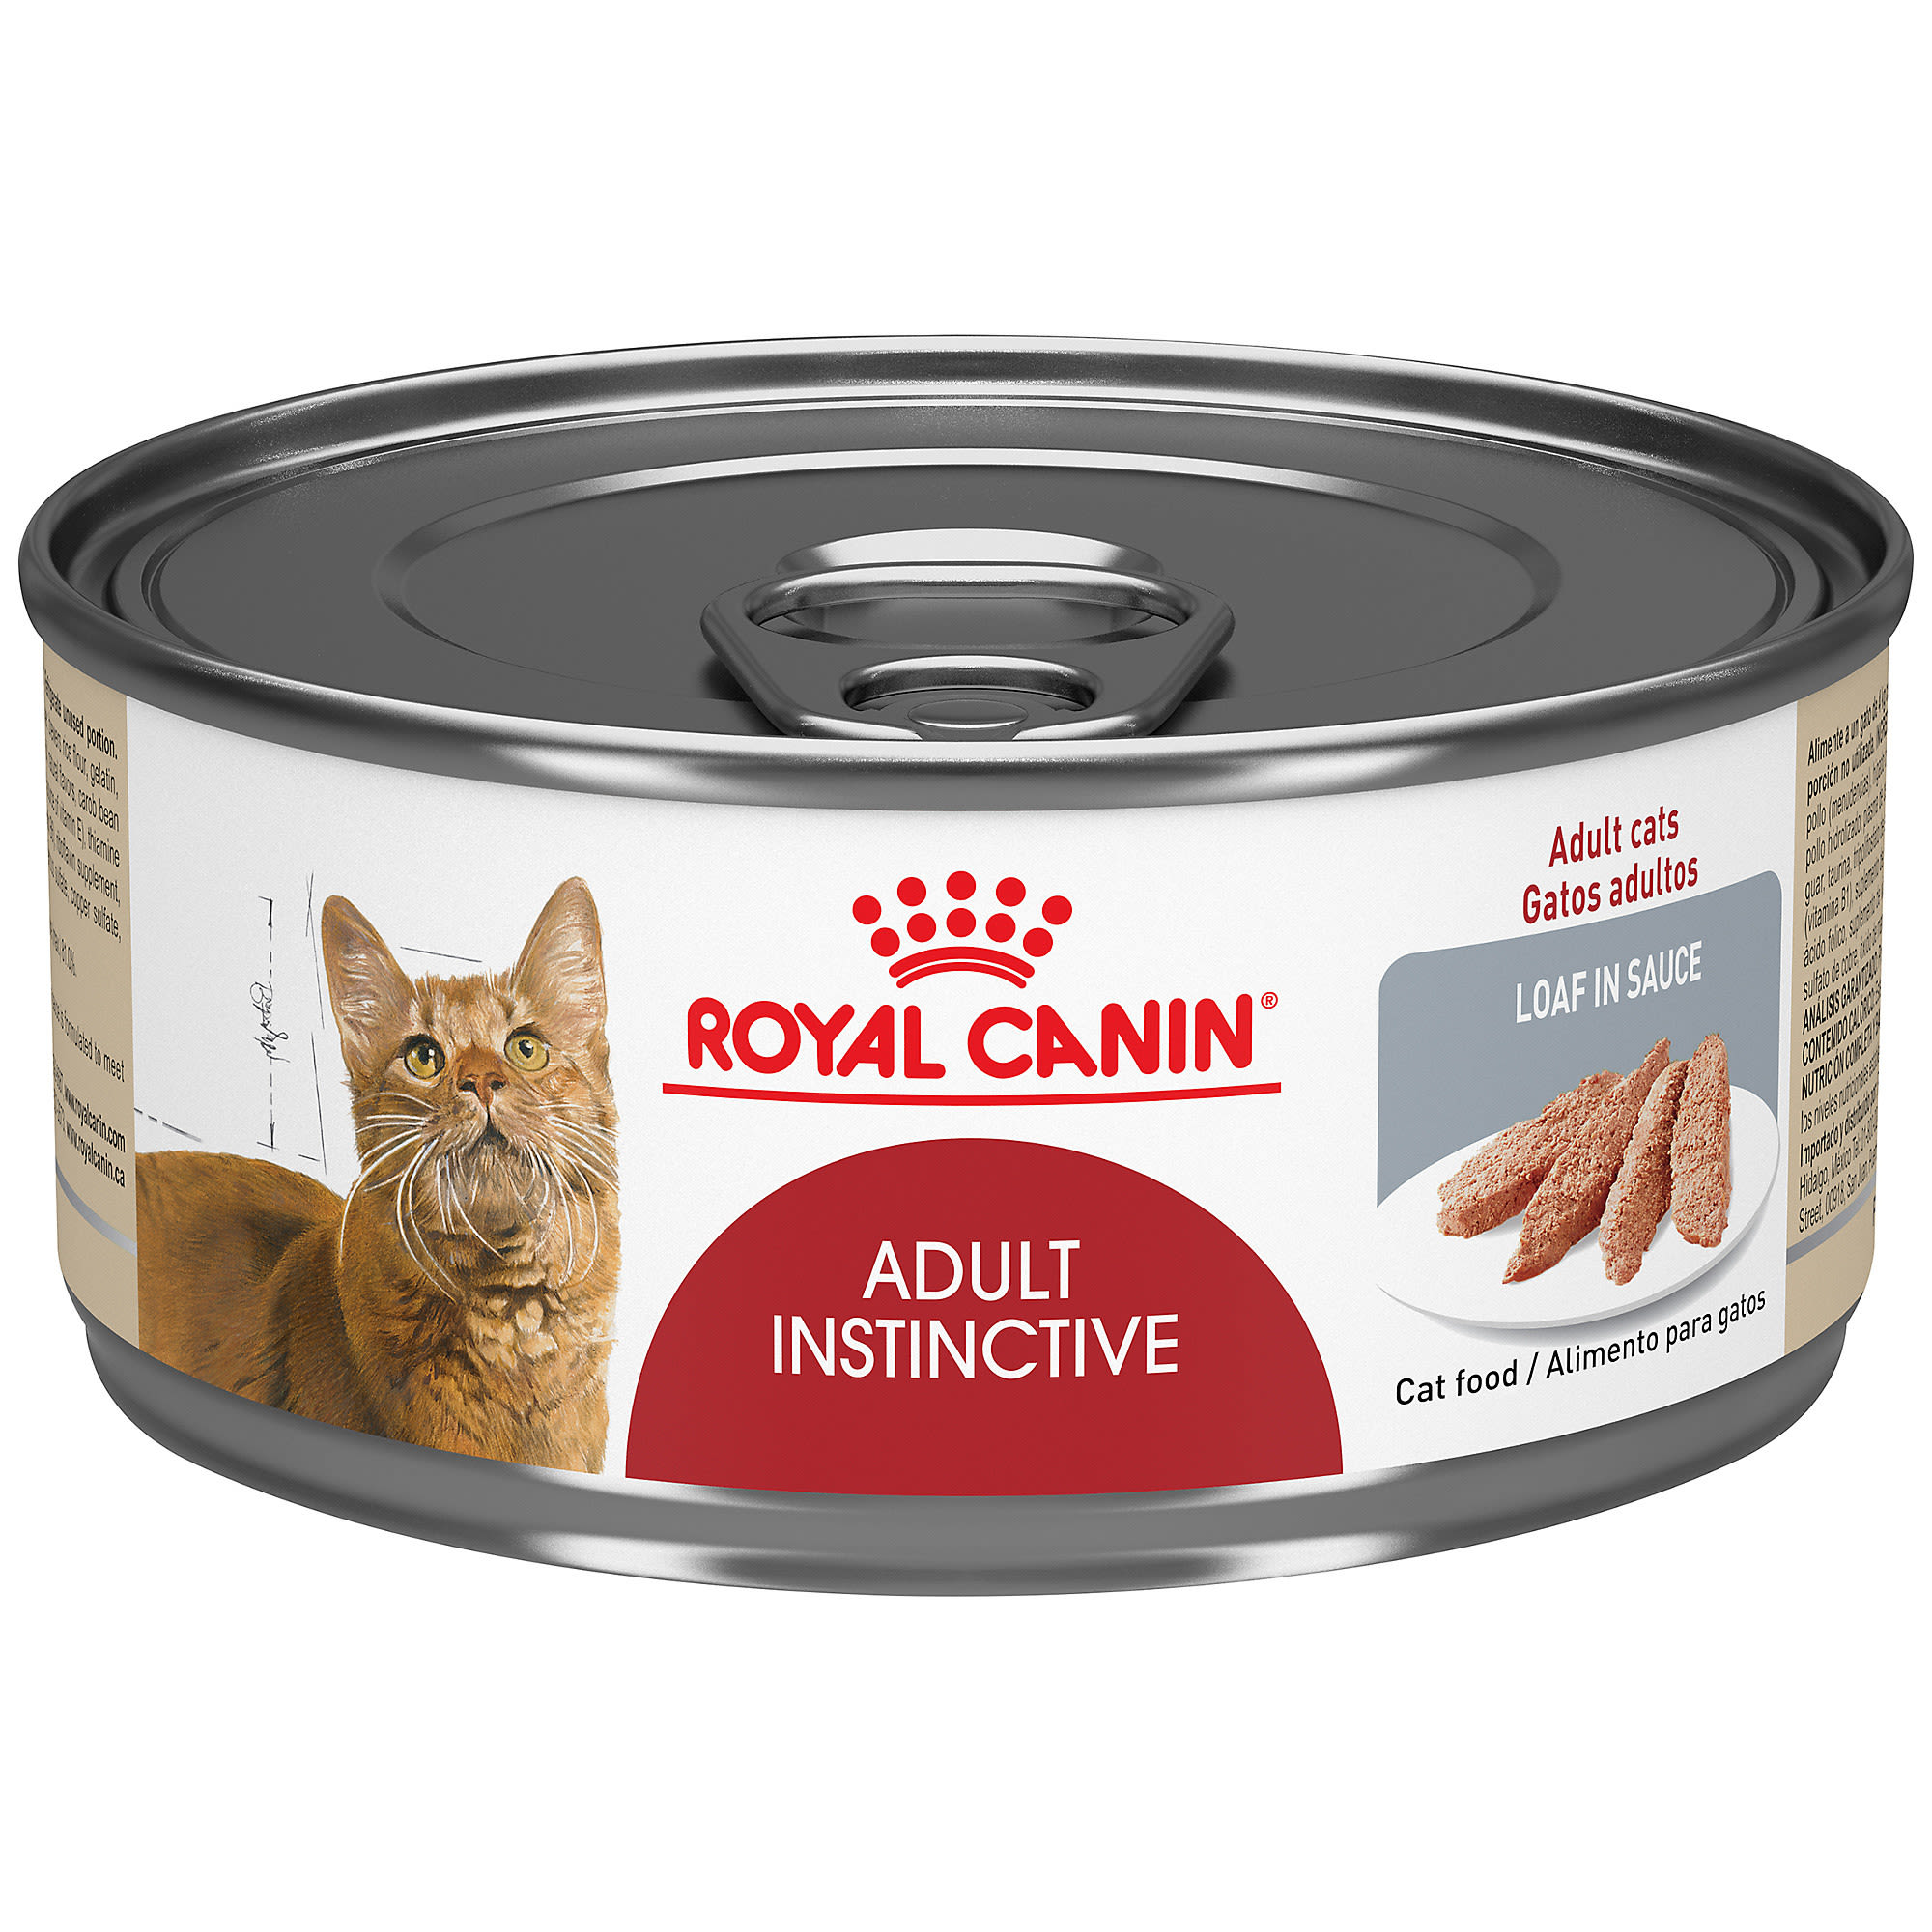 royal canin hairball control cat food